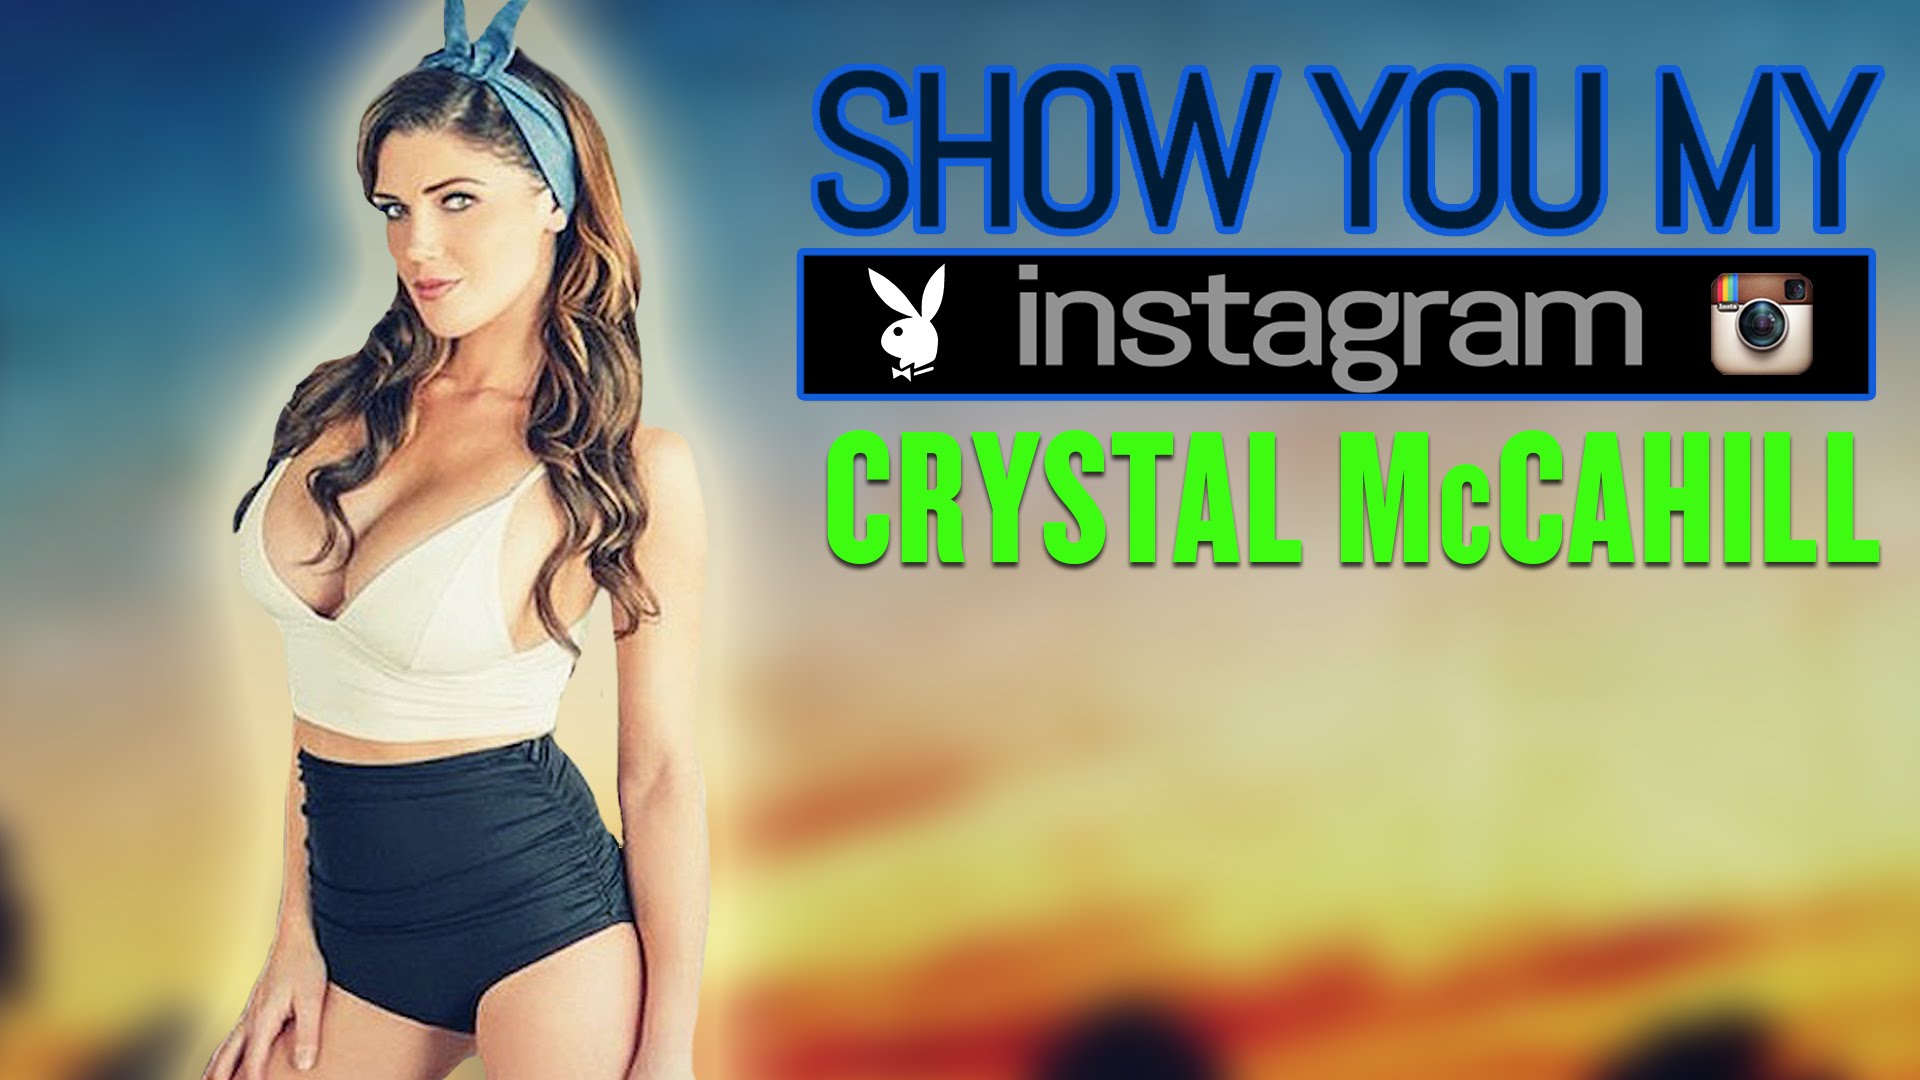 Conheça o Instagram de Crystal McCahill